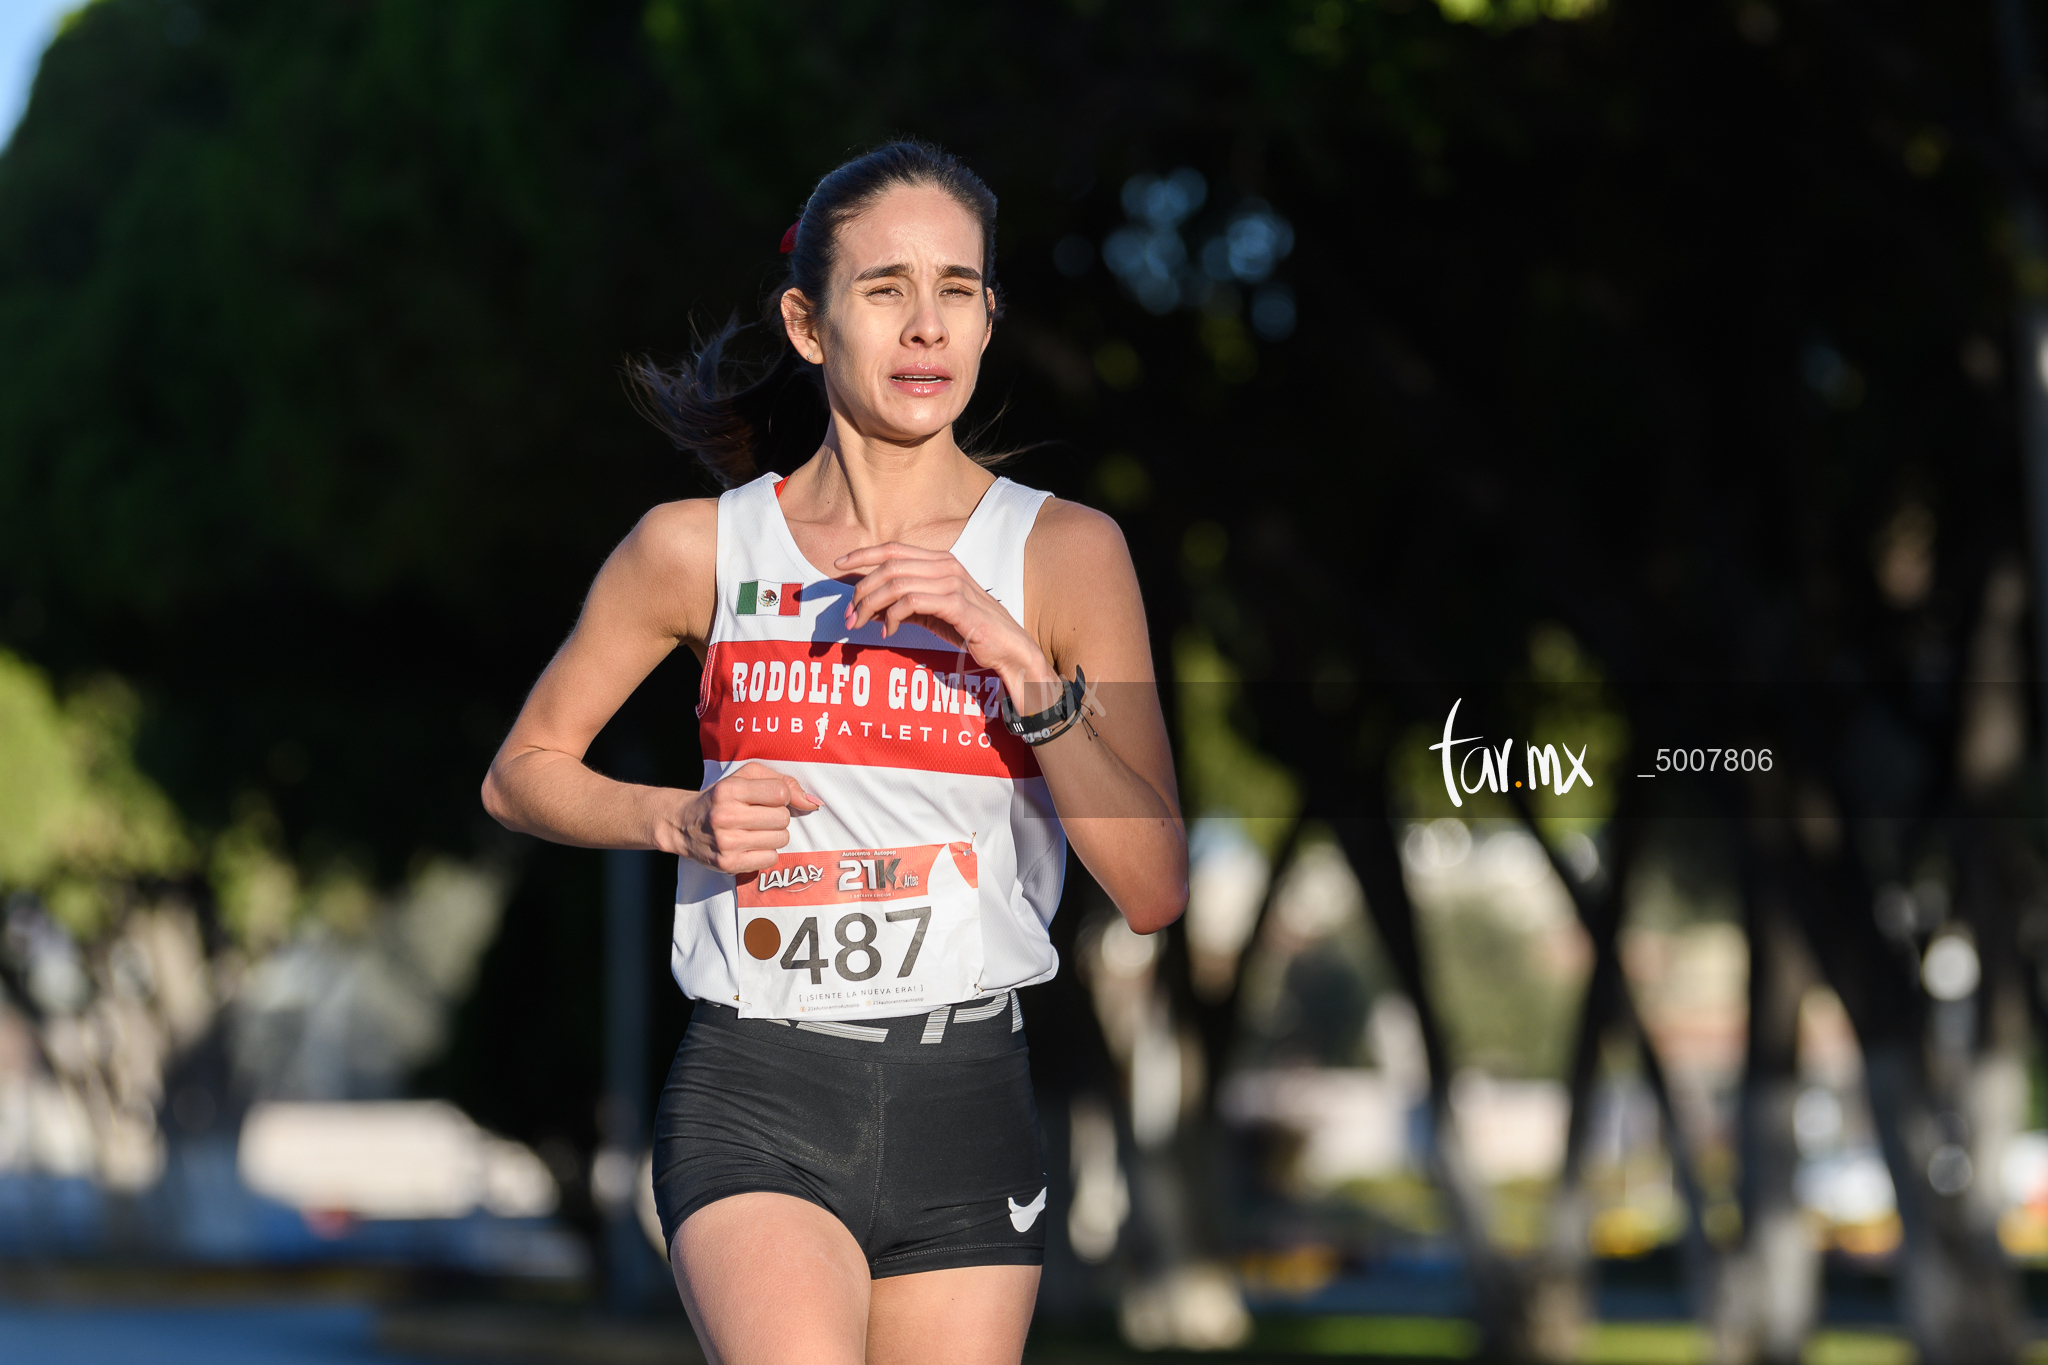 Jessica Flores, campeona 21k